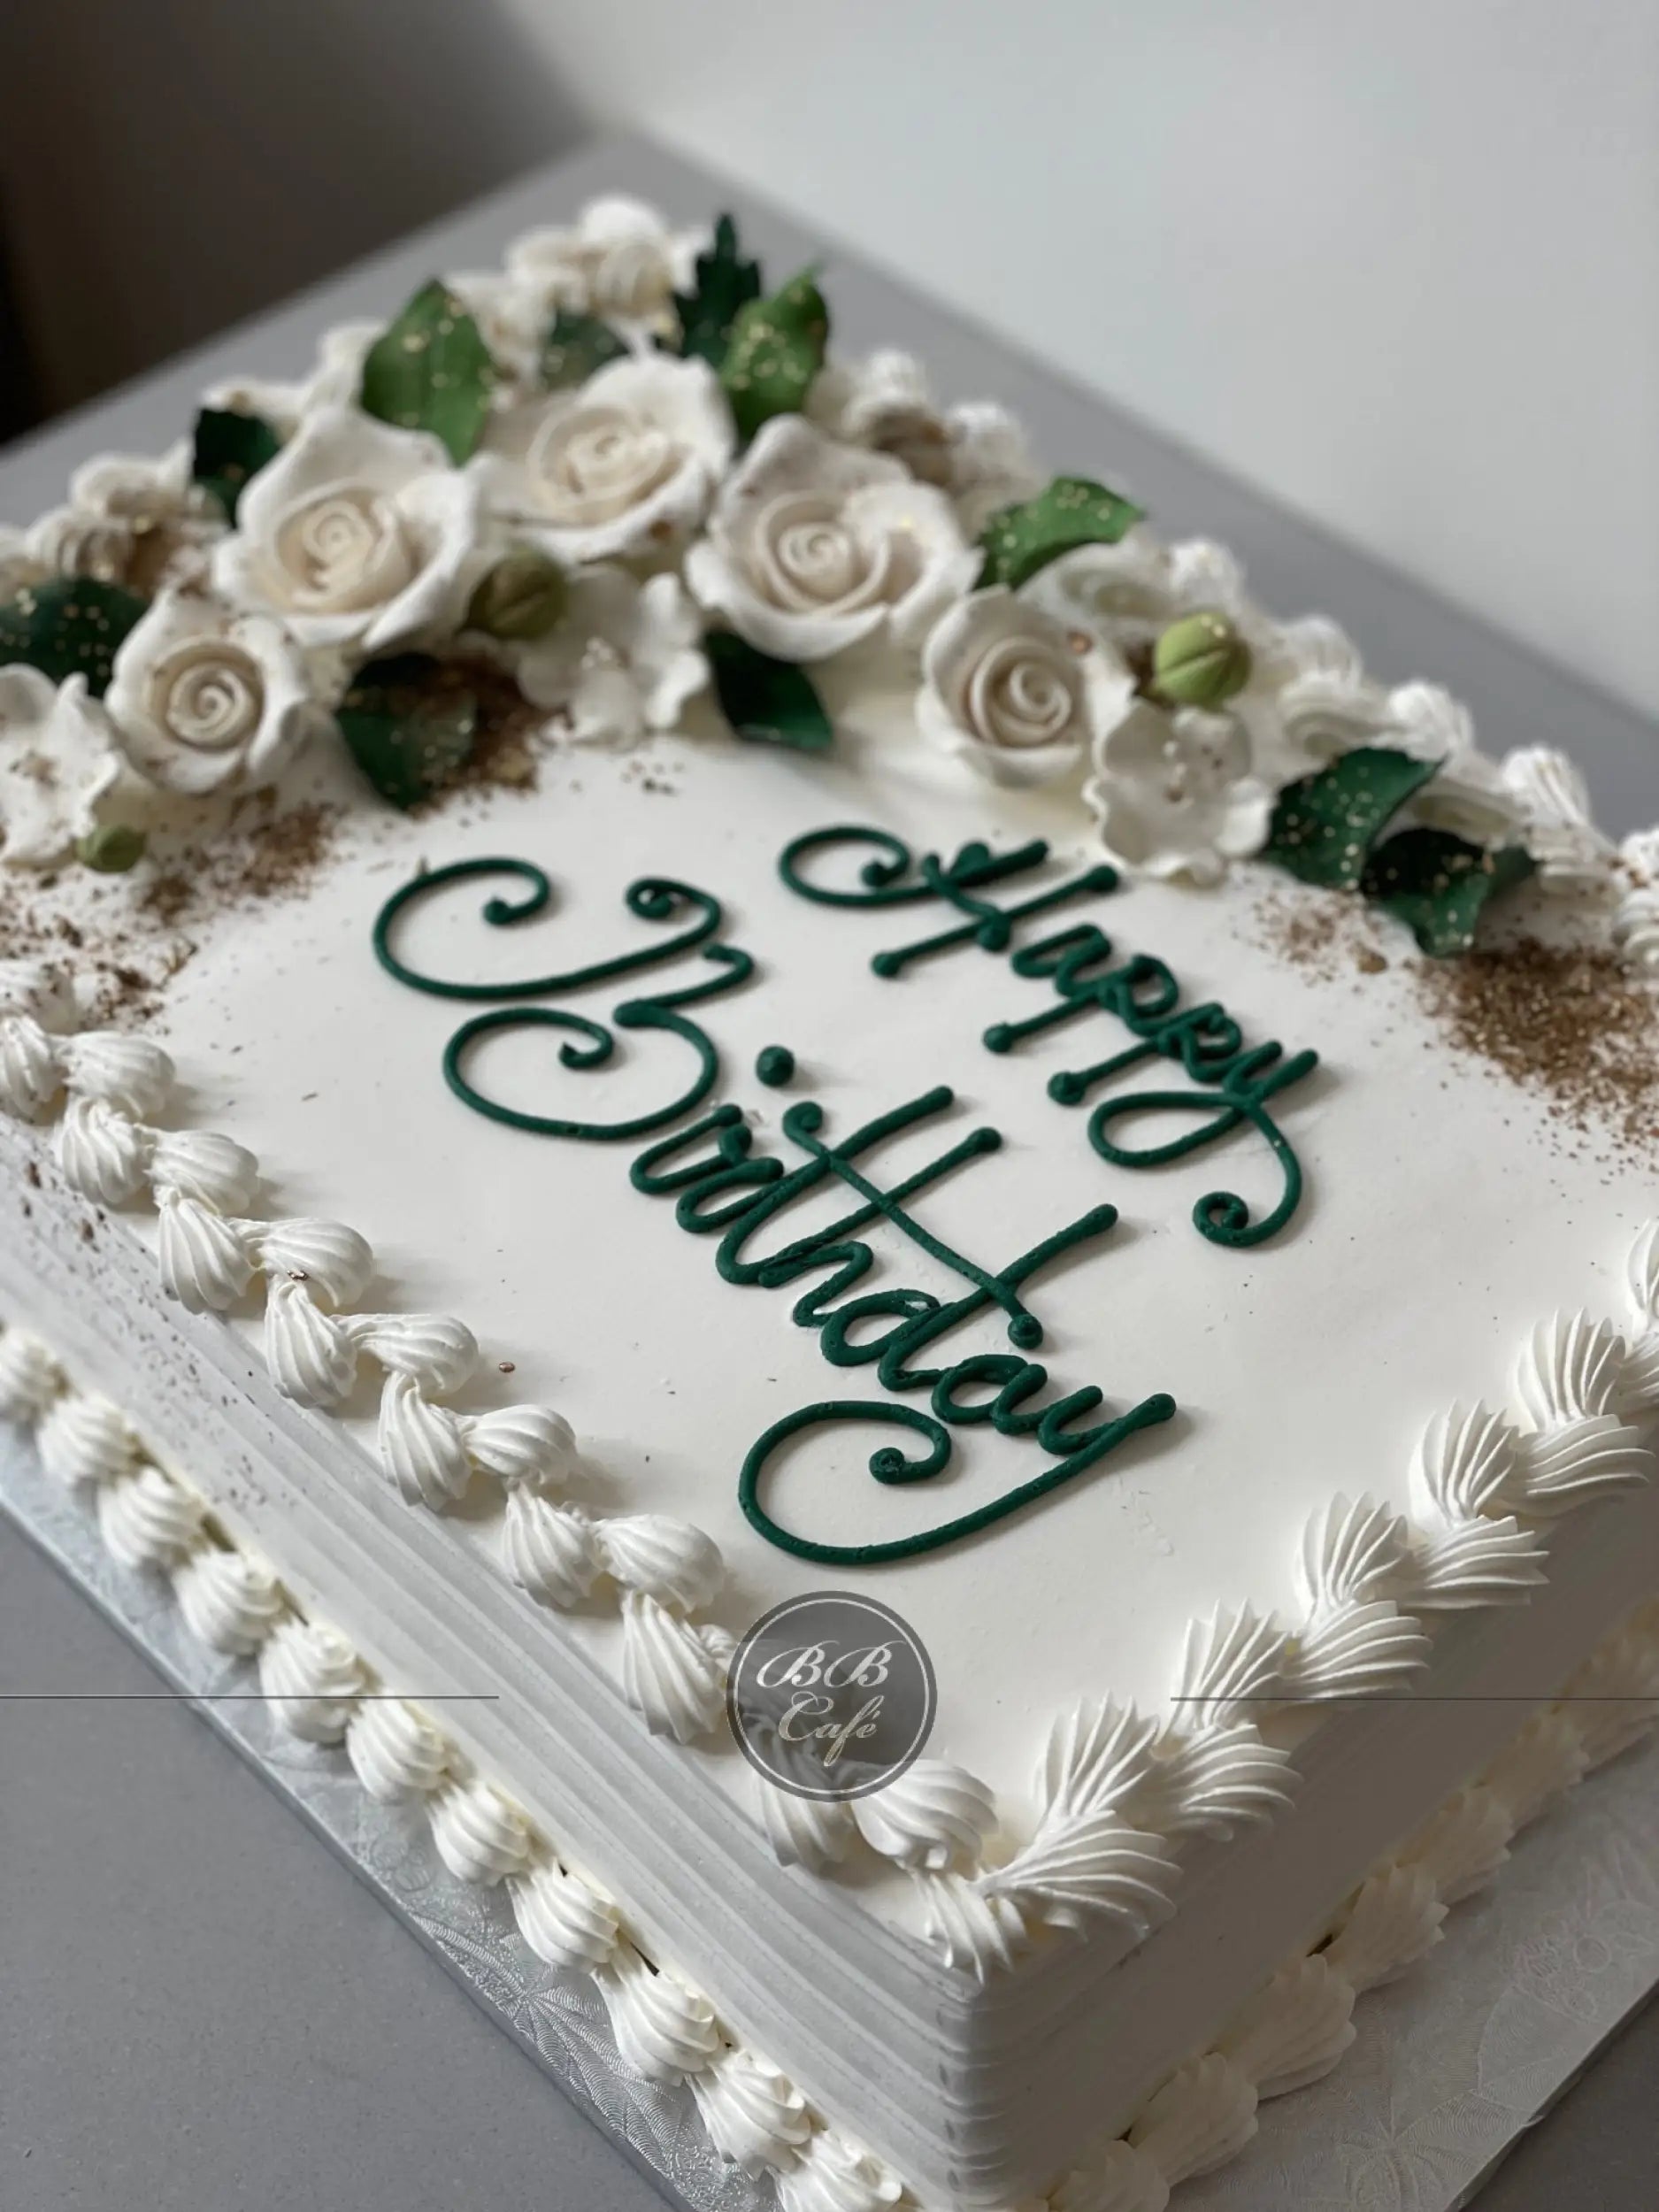 Sugar roses on whipped cream - custom cake